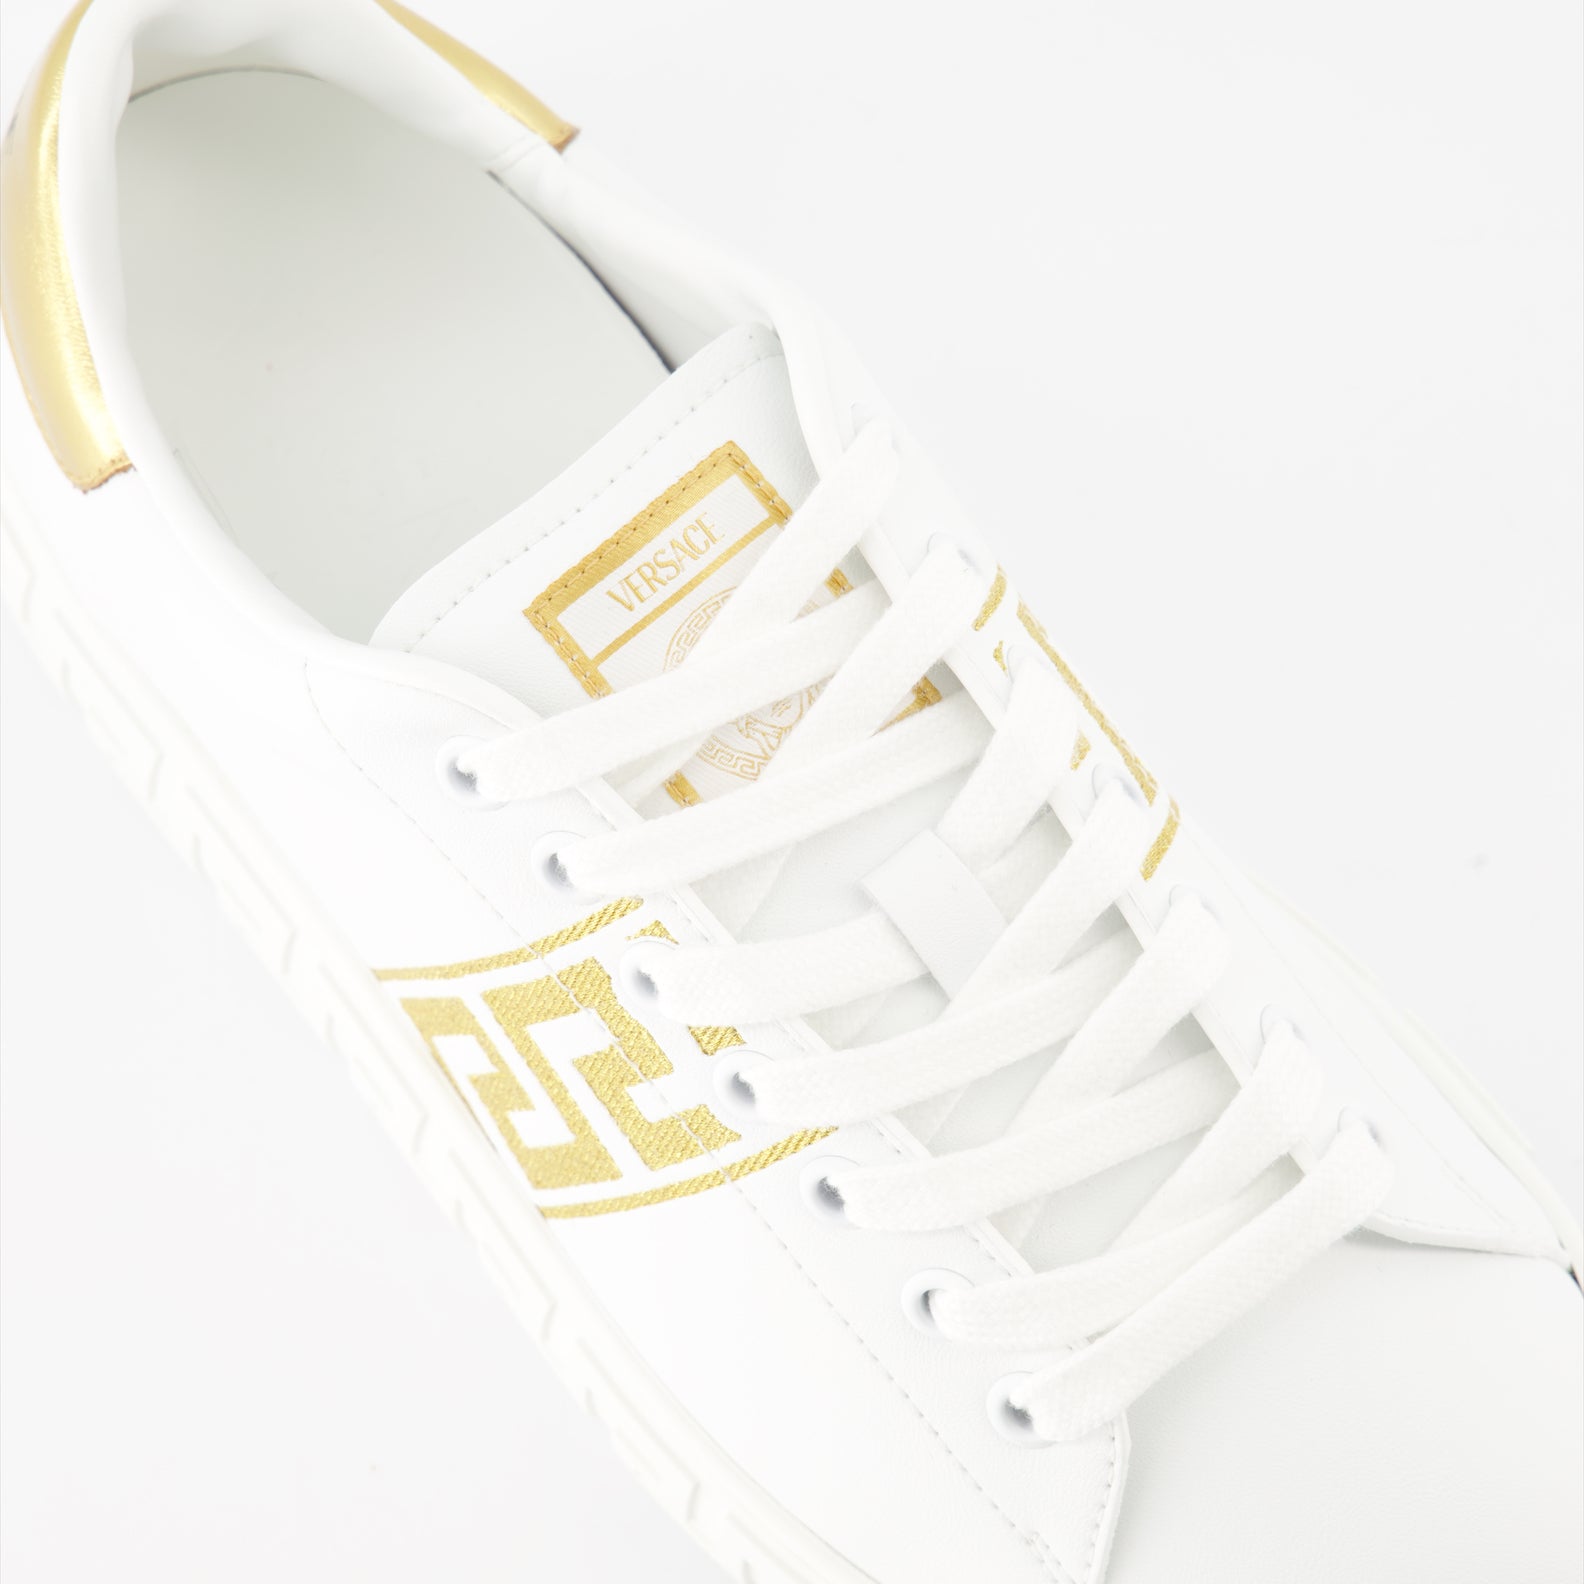 White Greca sneakers